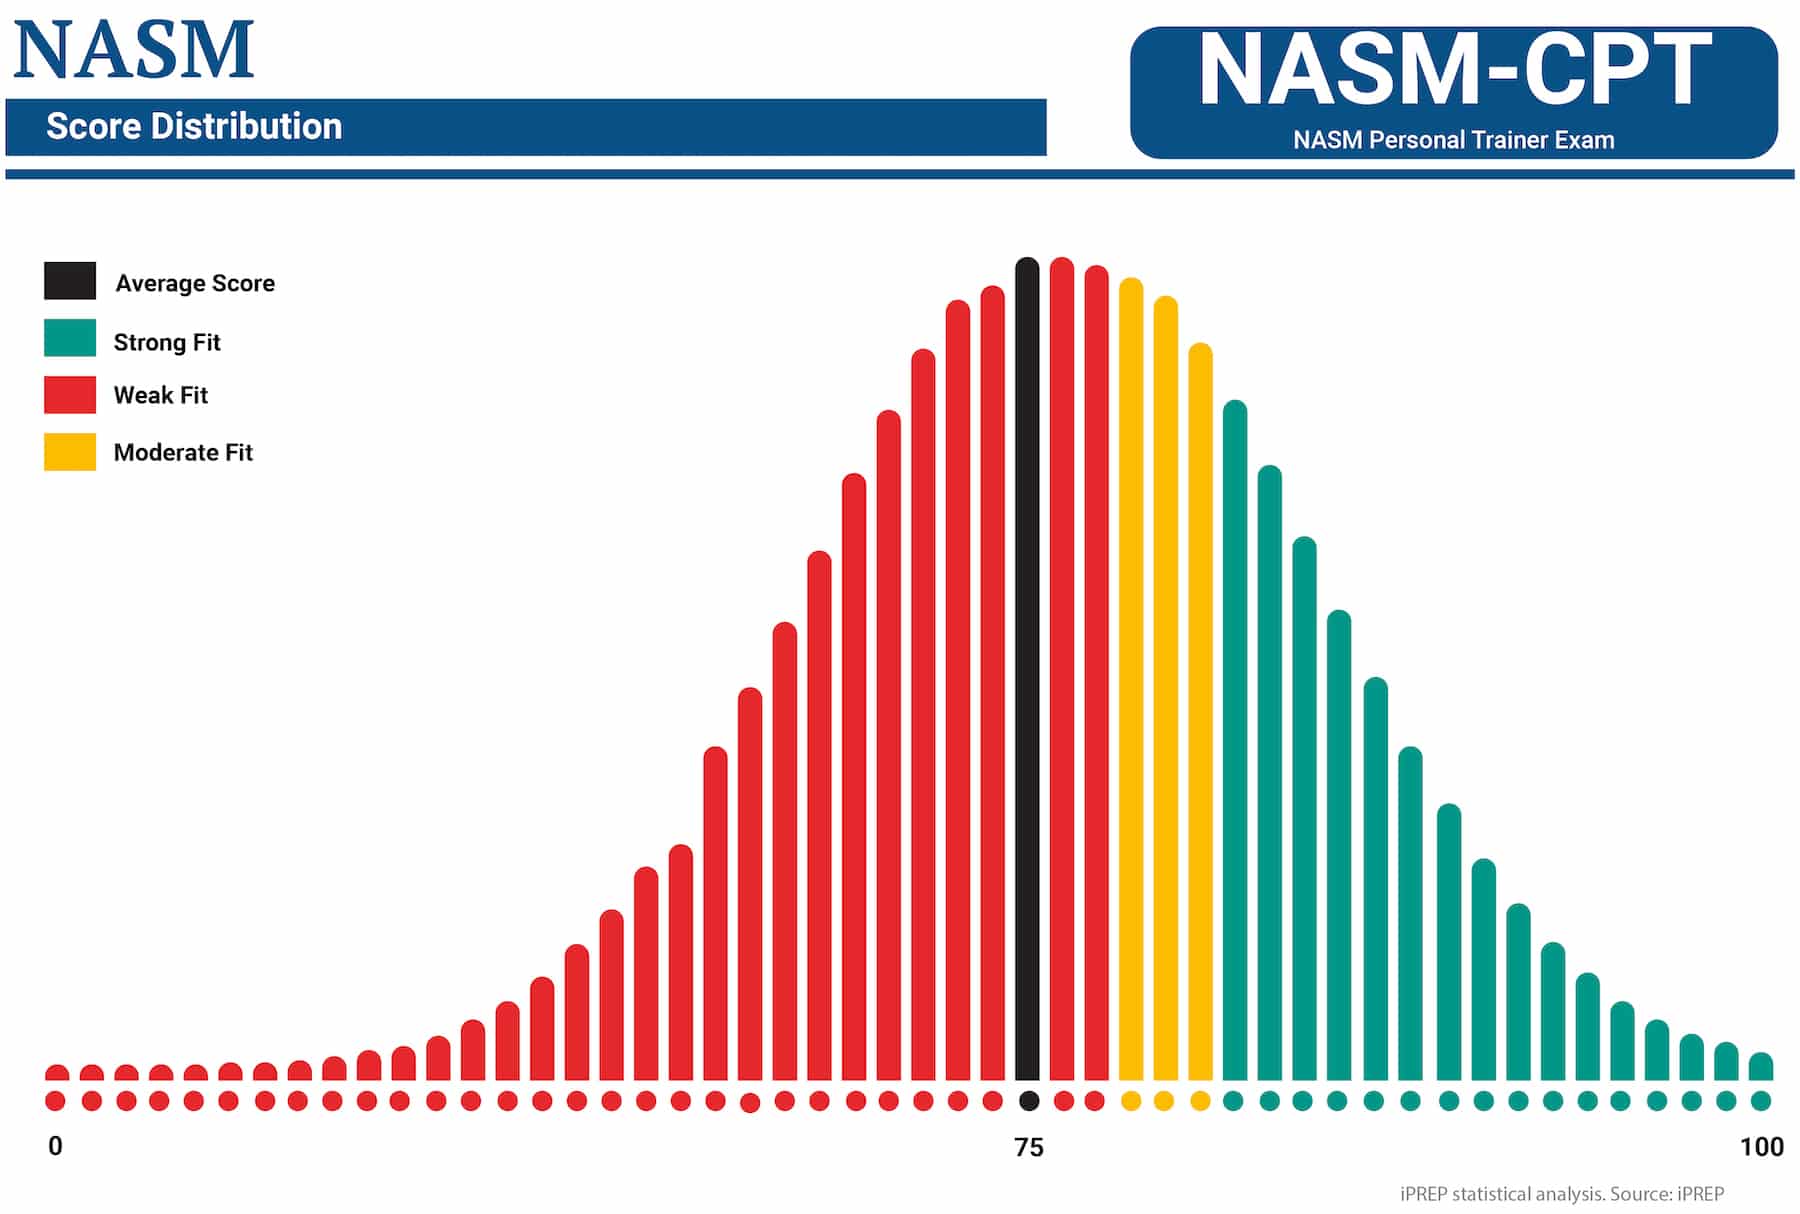 NASM-CPT Test score distribution statistical analysis. Source: iPREP